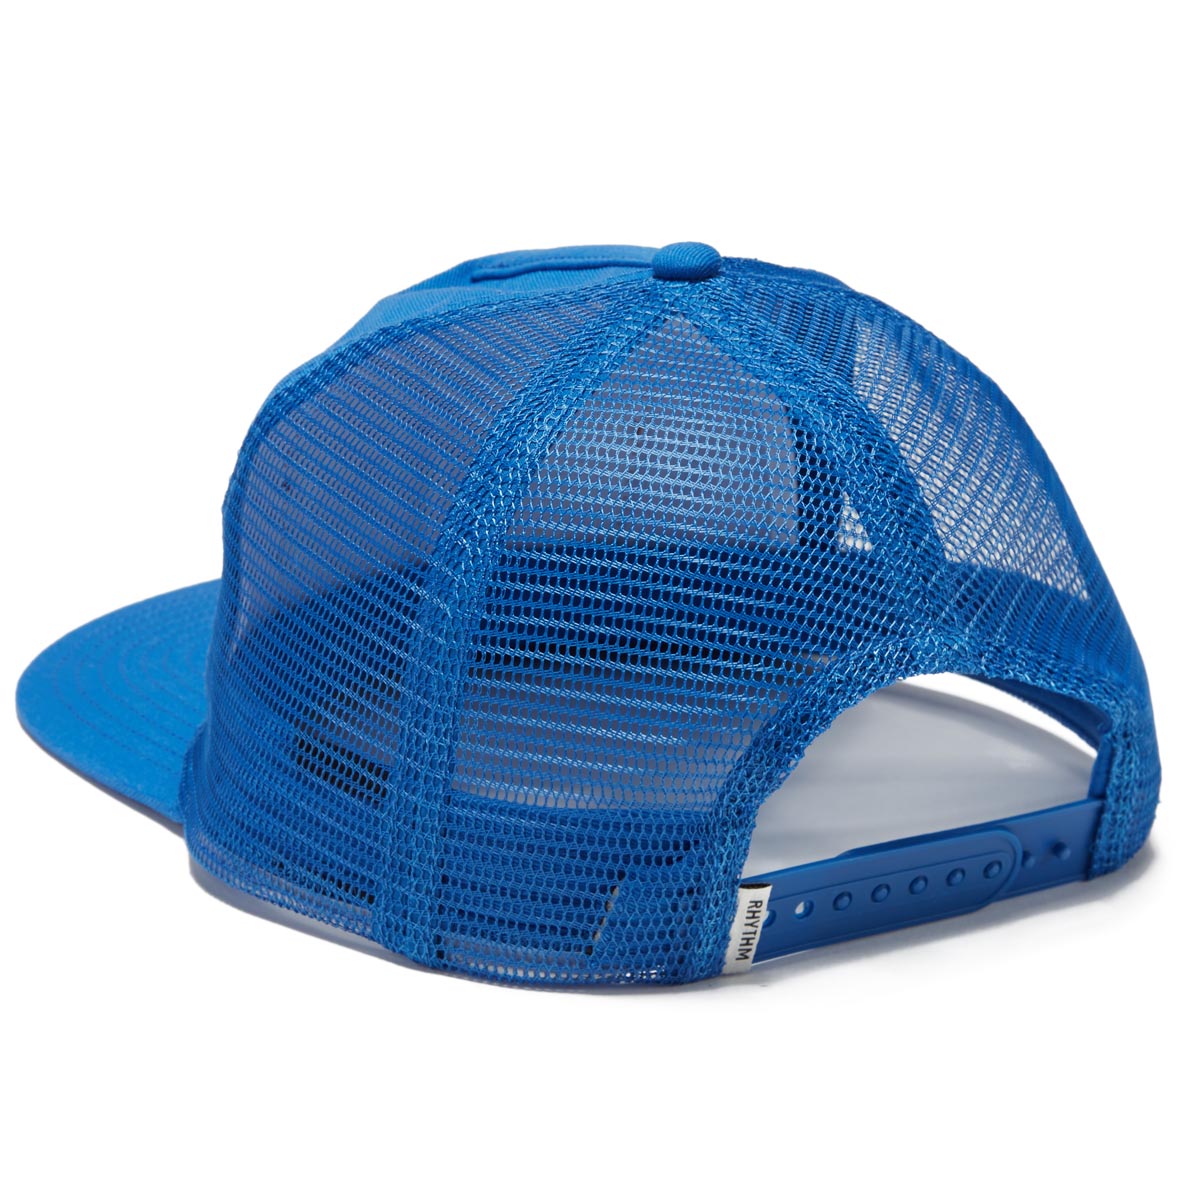 Rhythm Pathway Trucker Hat - Artic Blue image 2